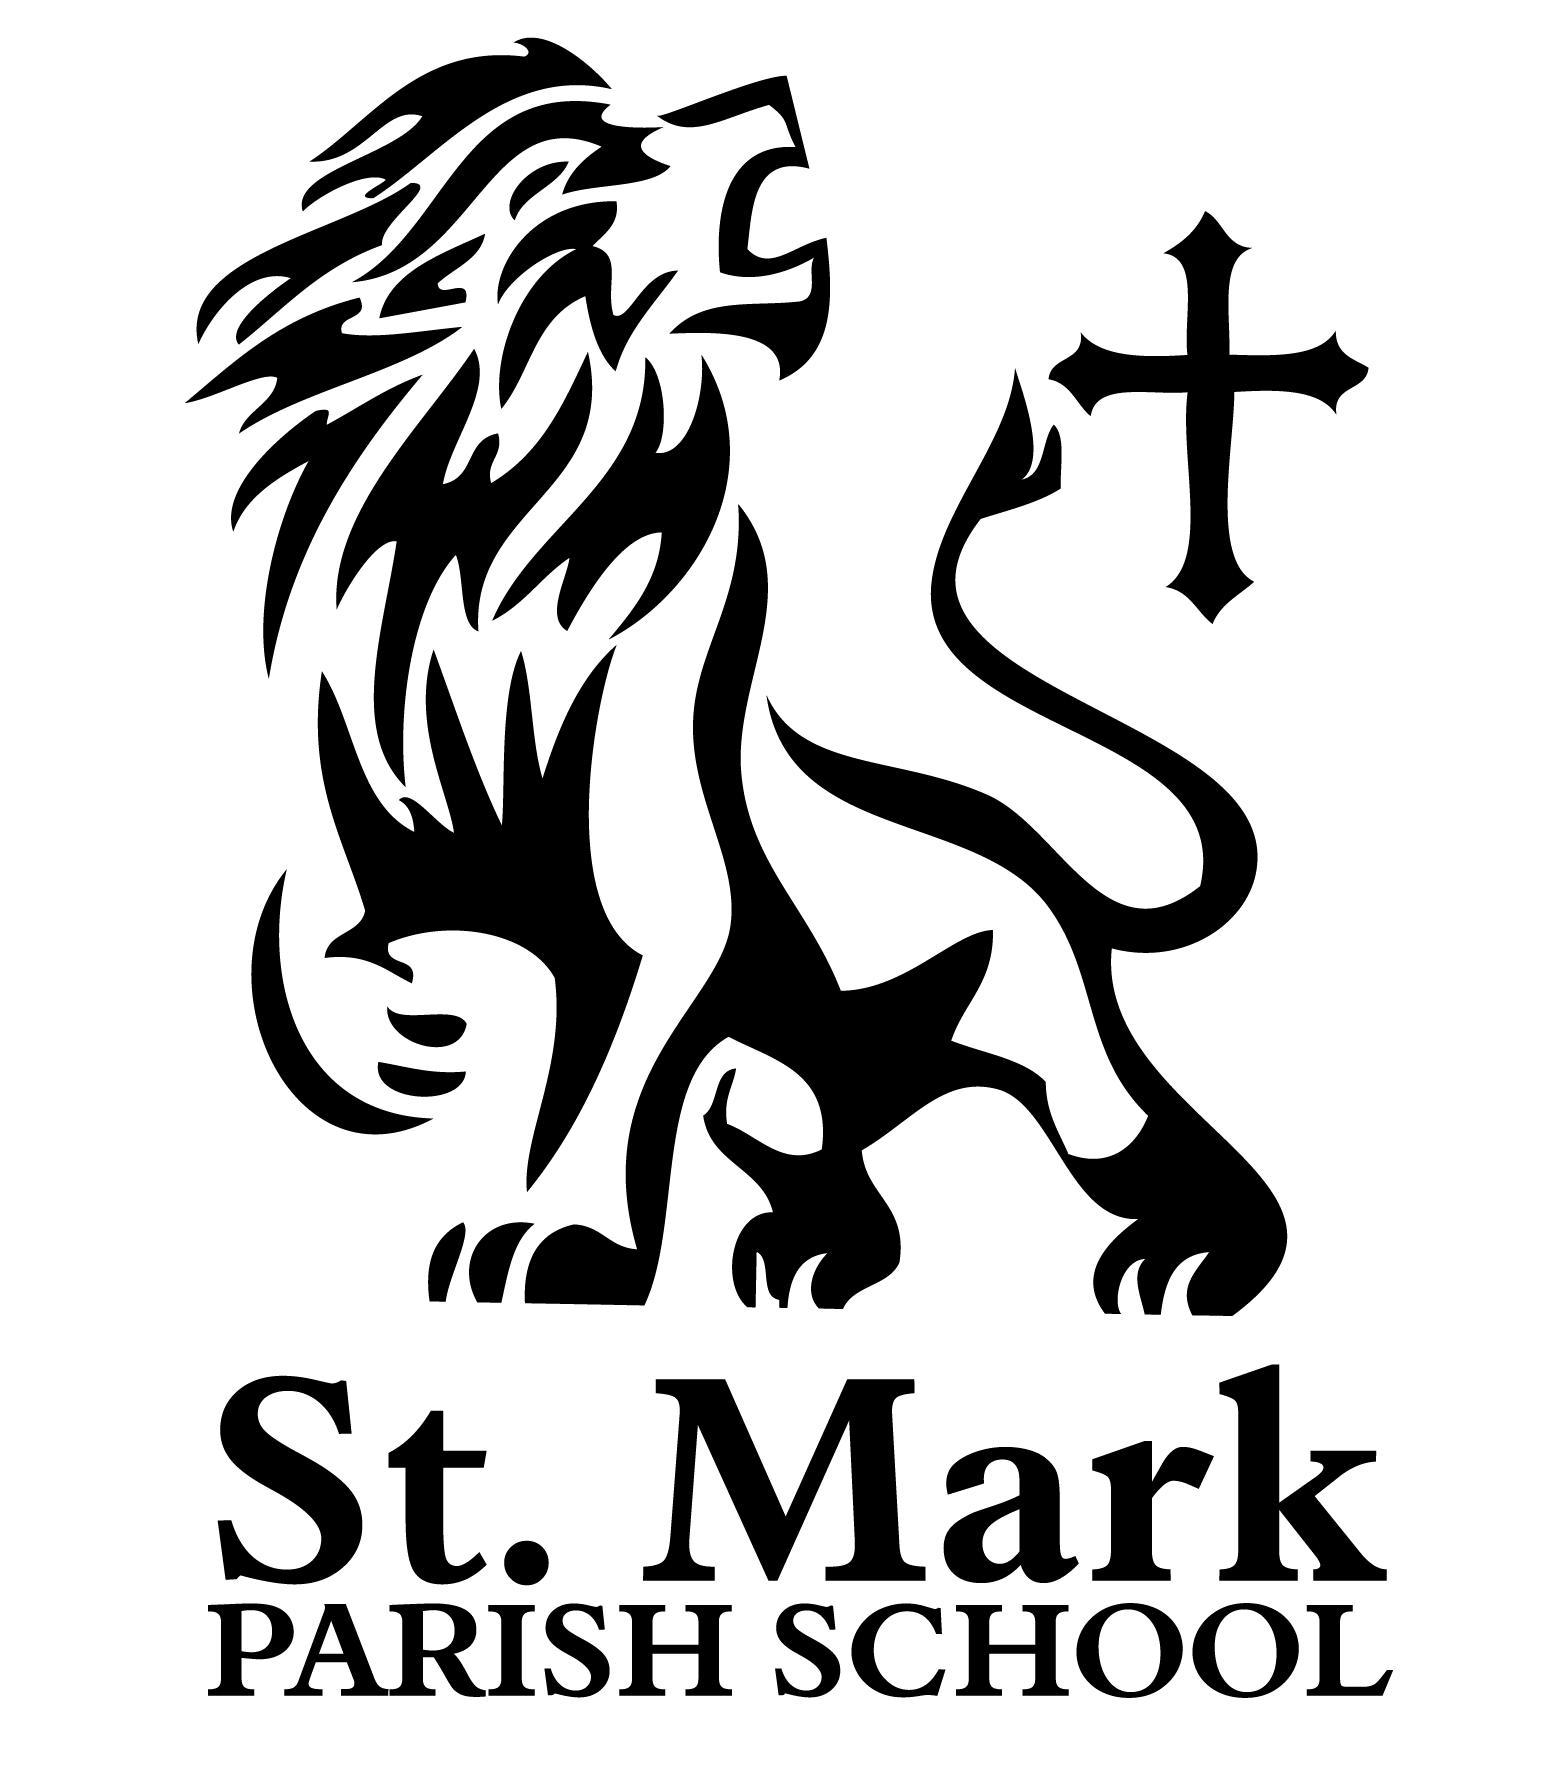 Christian Lion Logo - Our School – Saint Mark Catholic Church | logos | Symbols, Logos ...